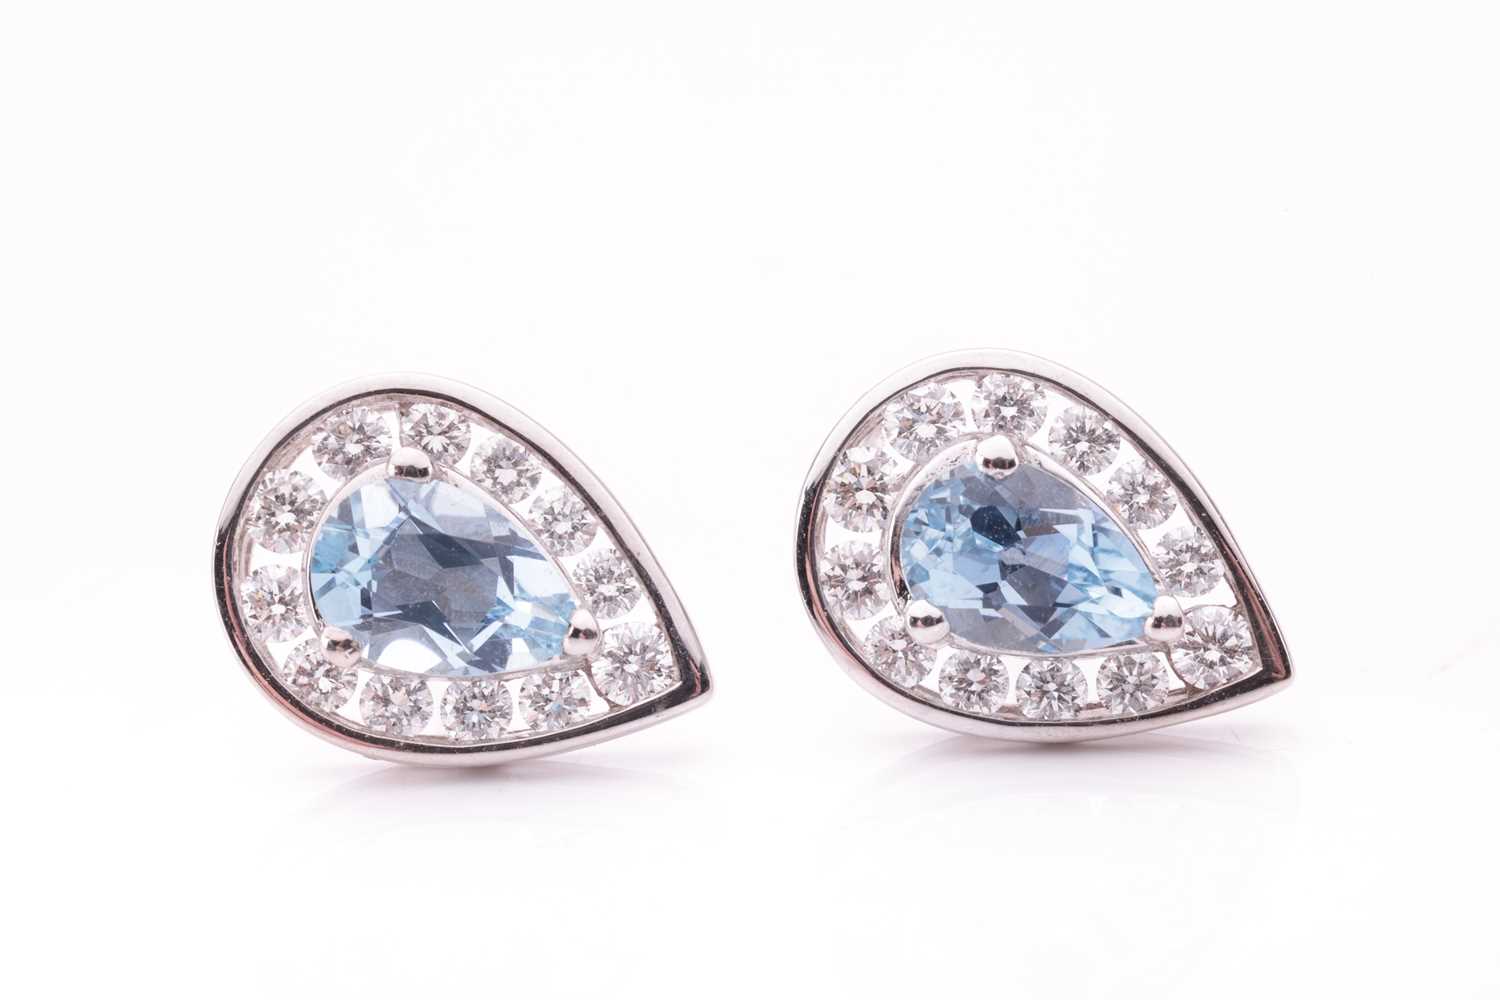 A pair of aquamarine and diamond stud earrings, each featuring a pear cut aquamarine with an estimat